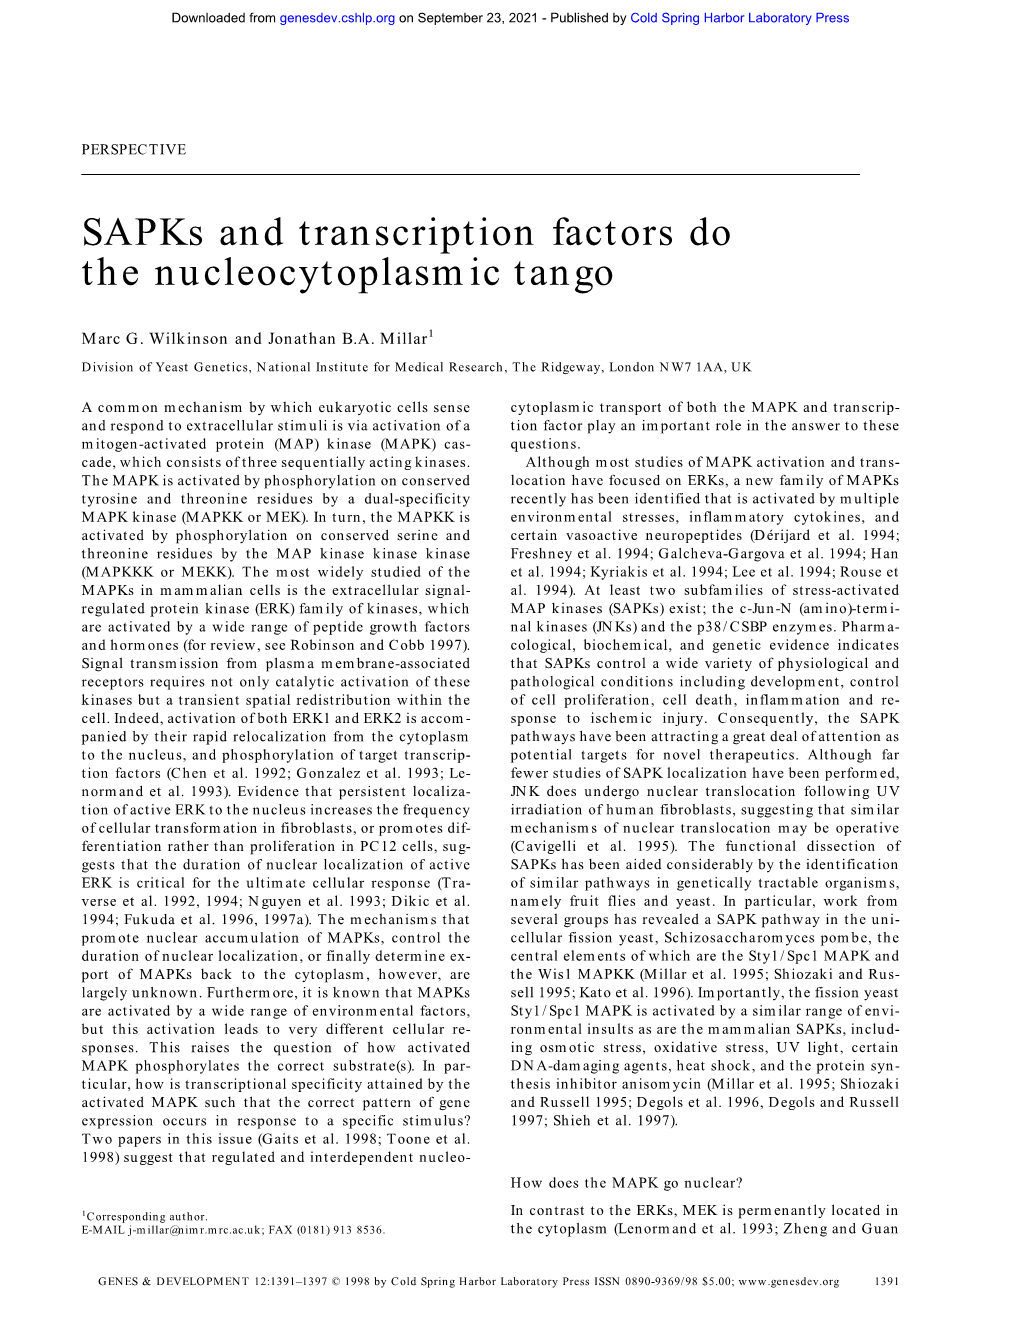 Sapks and Transcription Factors Do the Nucleocytoplasmic Tango